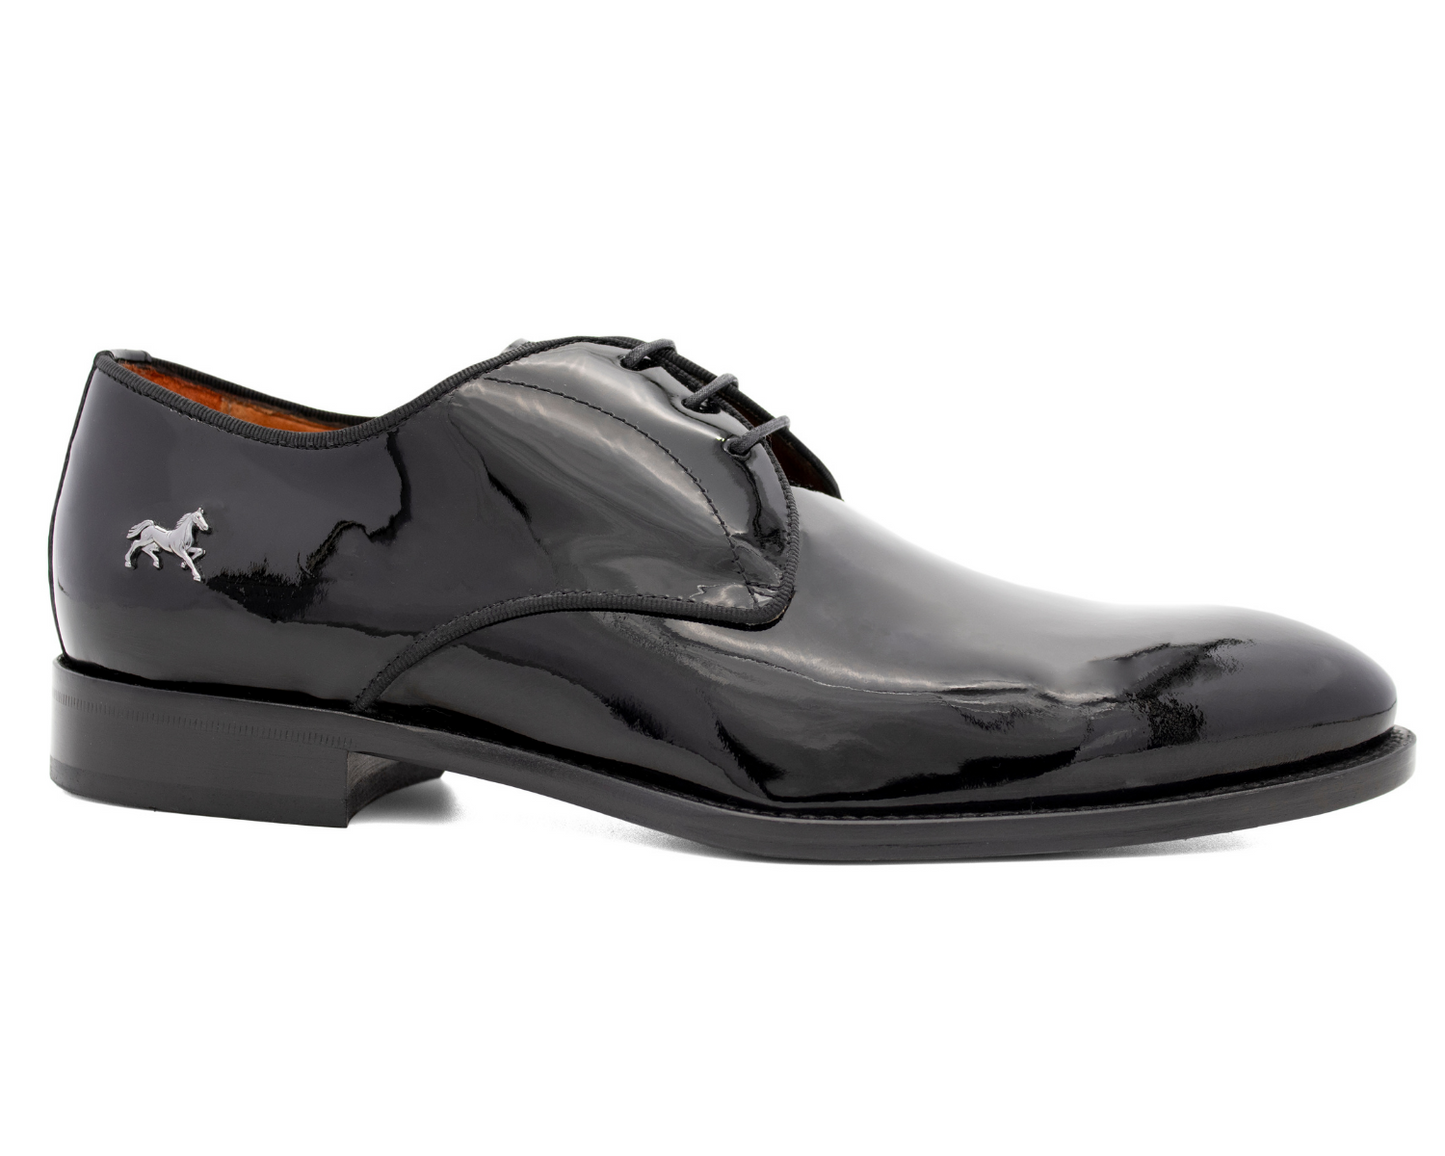 Cavalinho Patent Leather Oxford Shoes - Black - 1_7c9c258b-a388-4418-aff7-ad666cacfefc